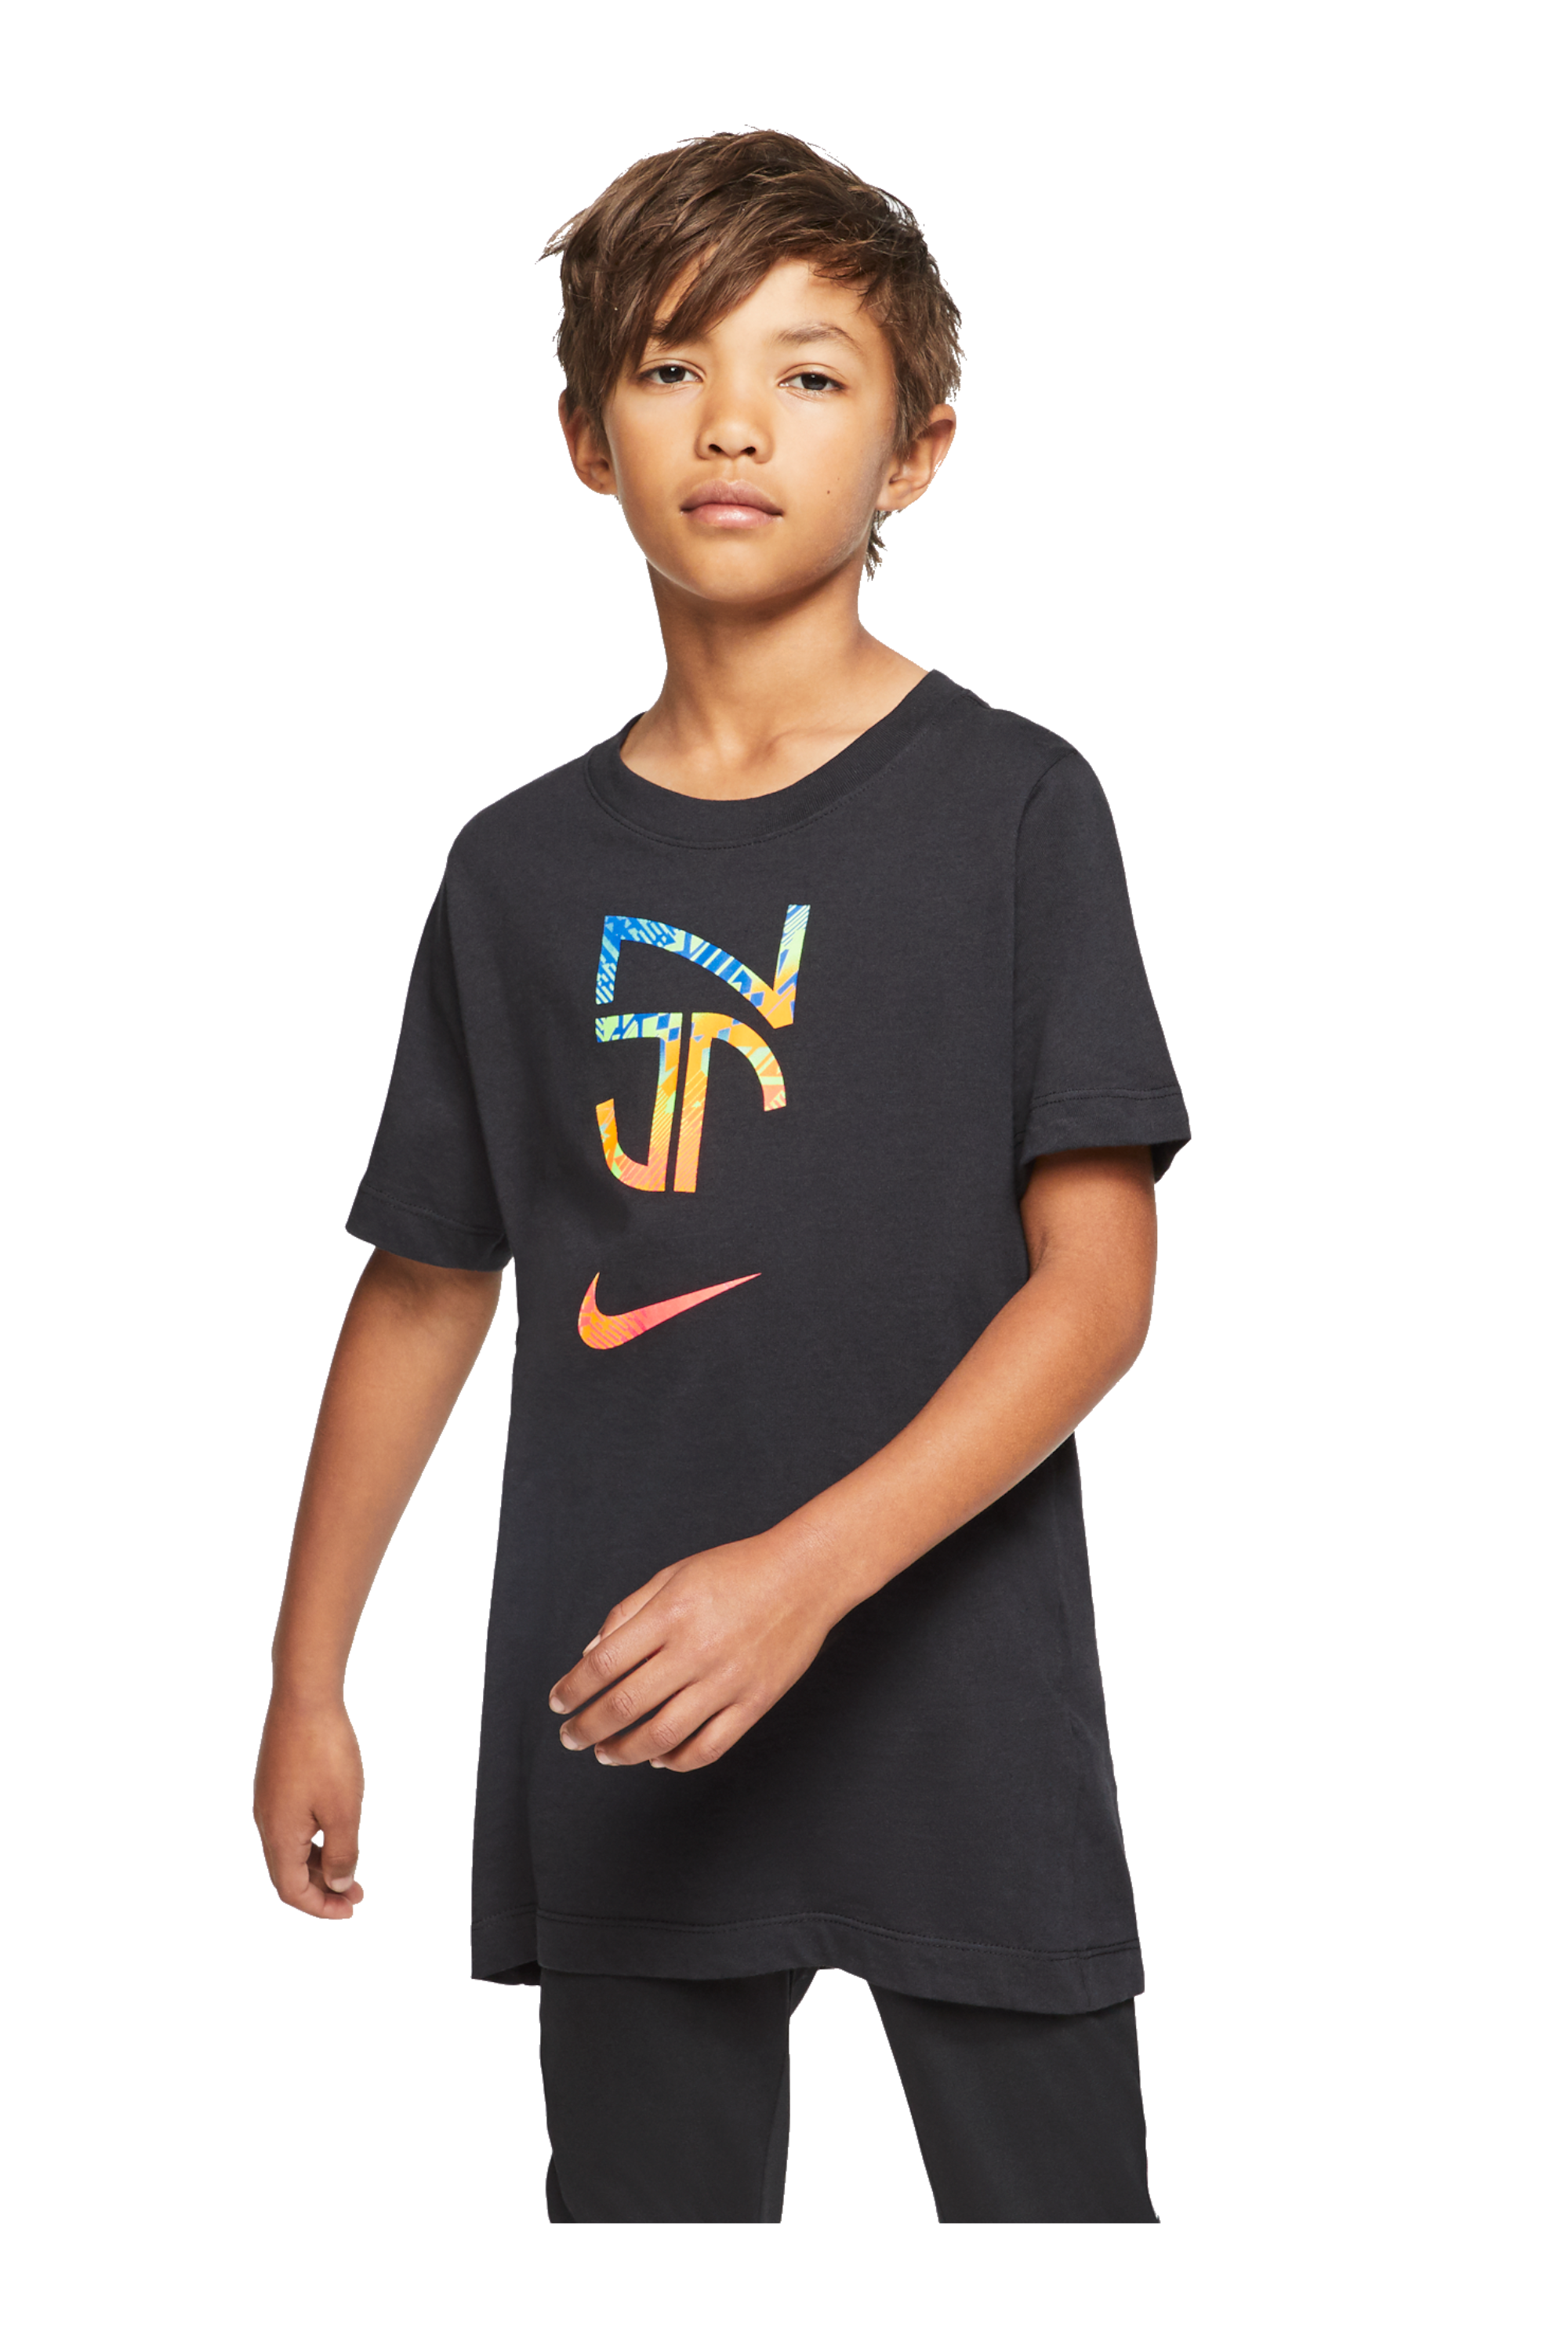 Shirt Nike Neymar Tee Merciurial Junior 